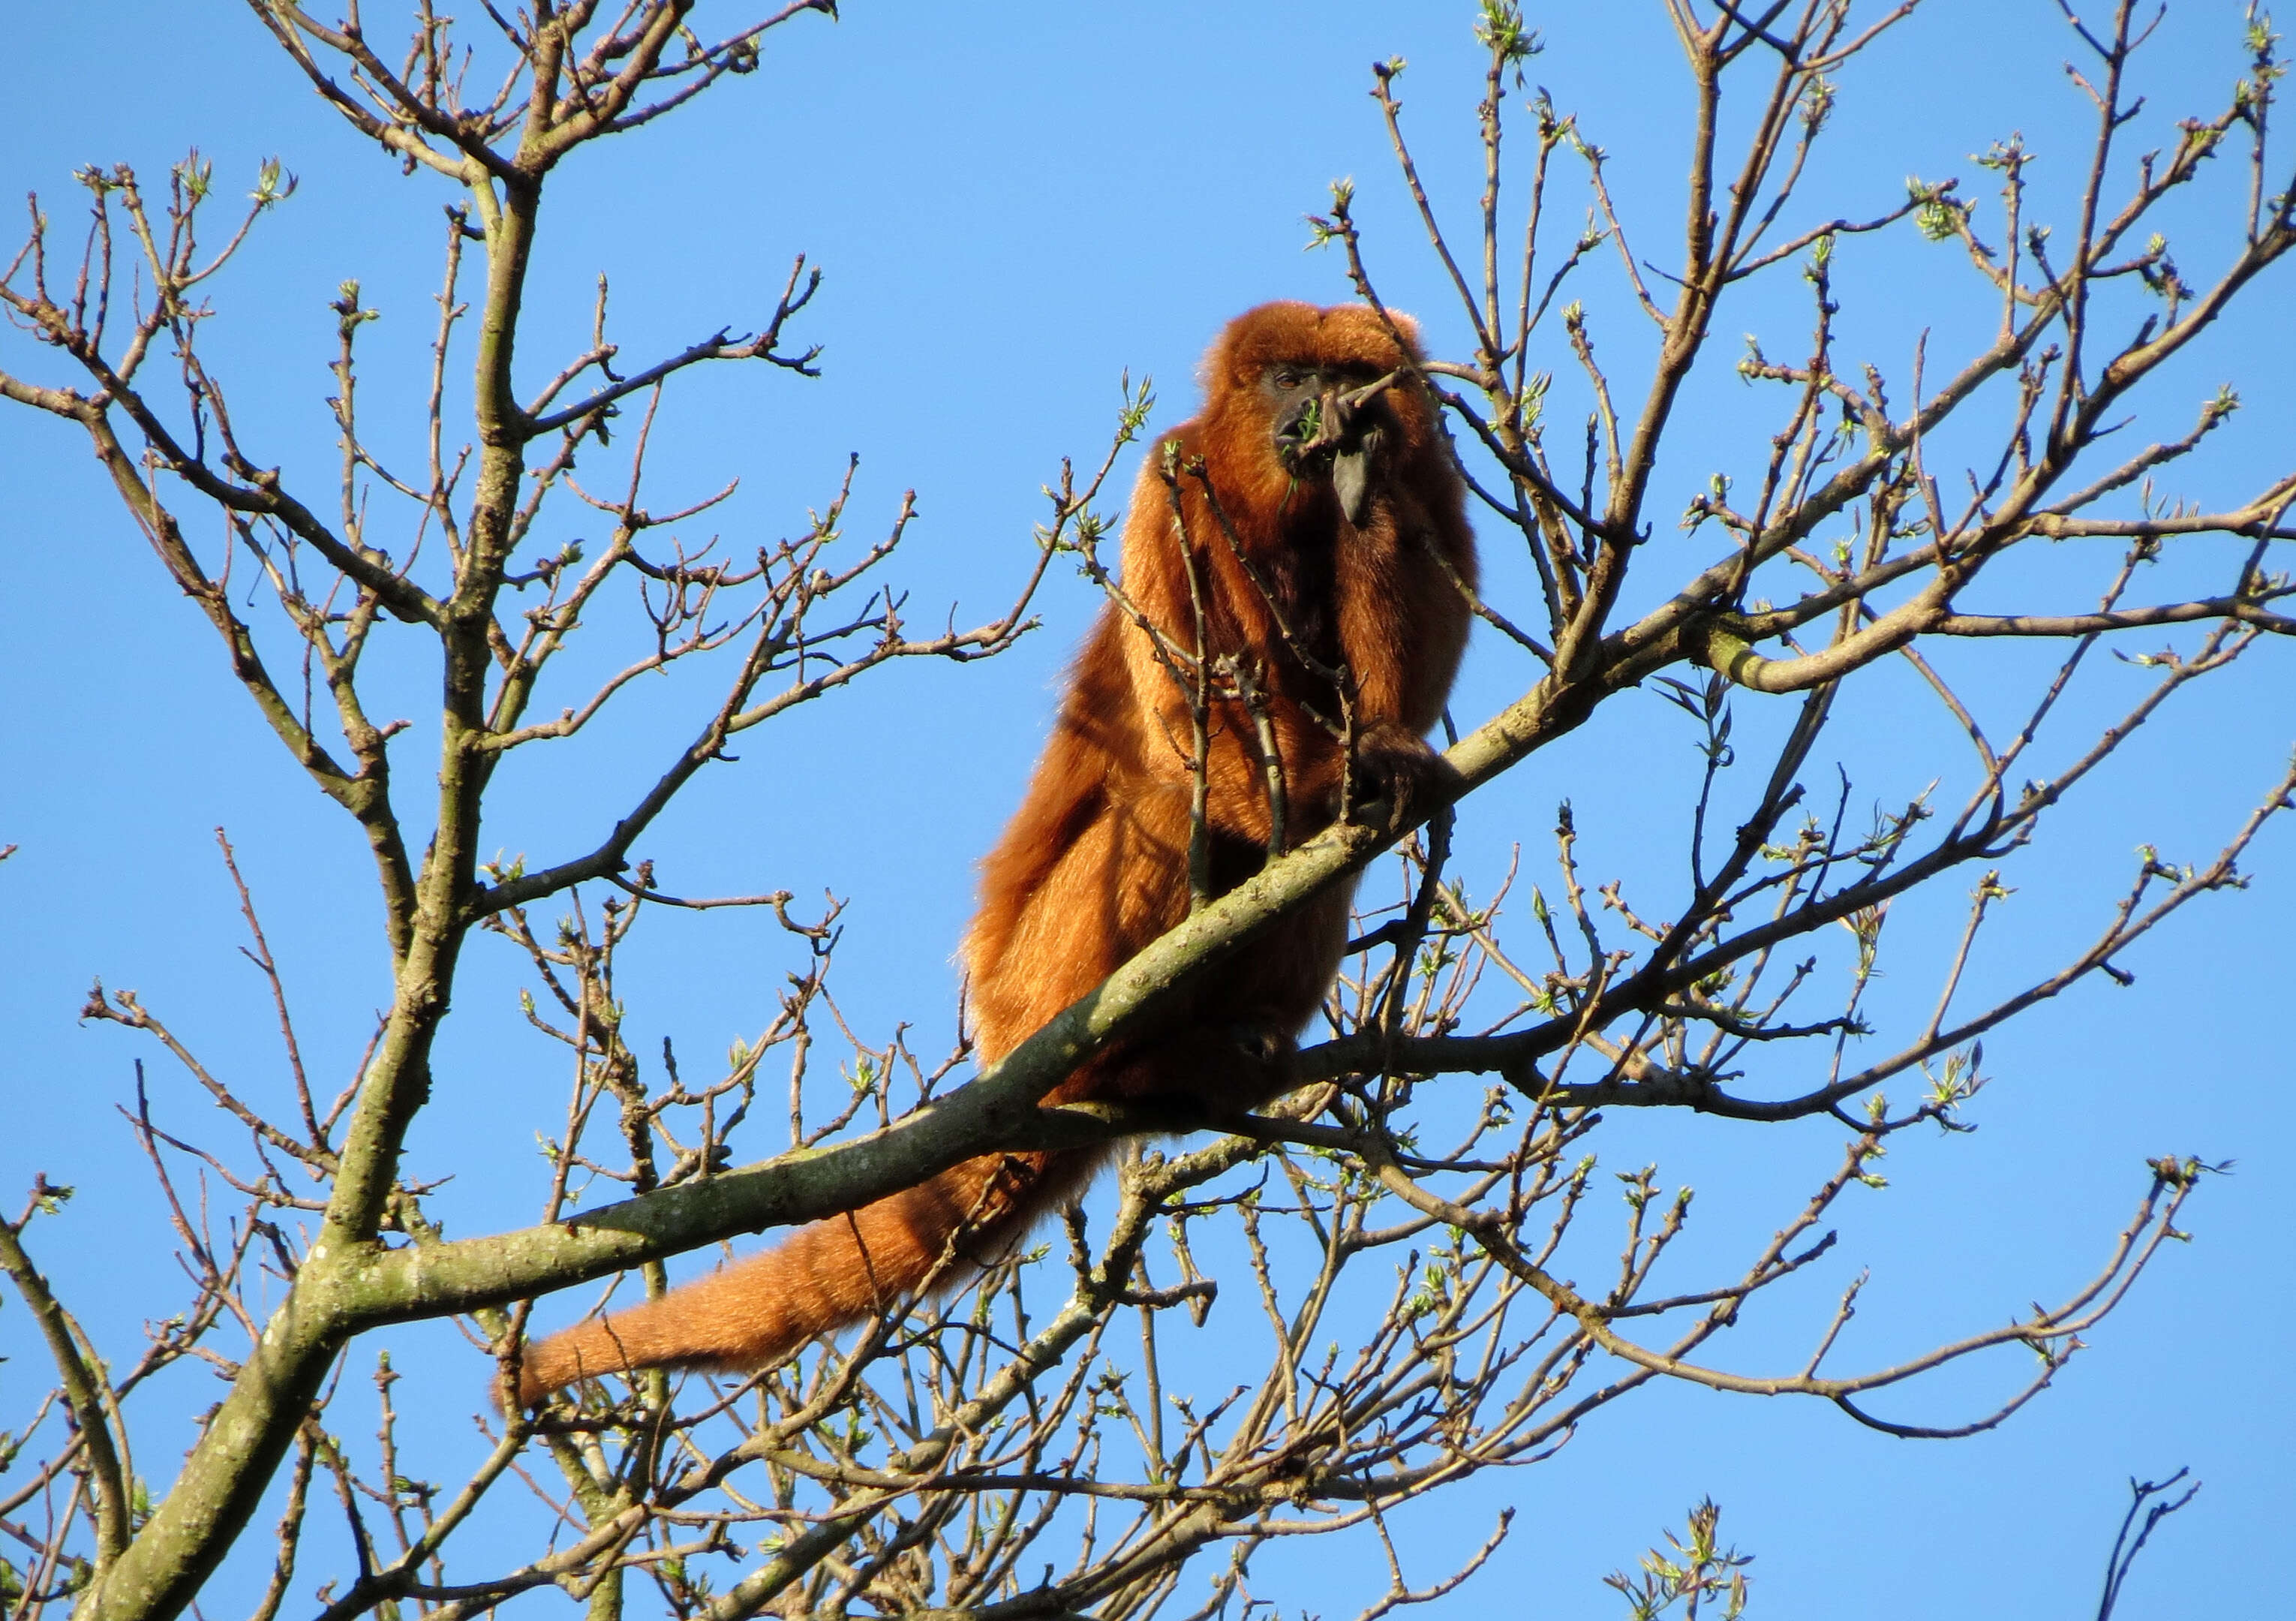 Image of Brown Howler Monkey